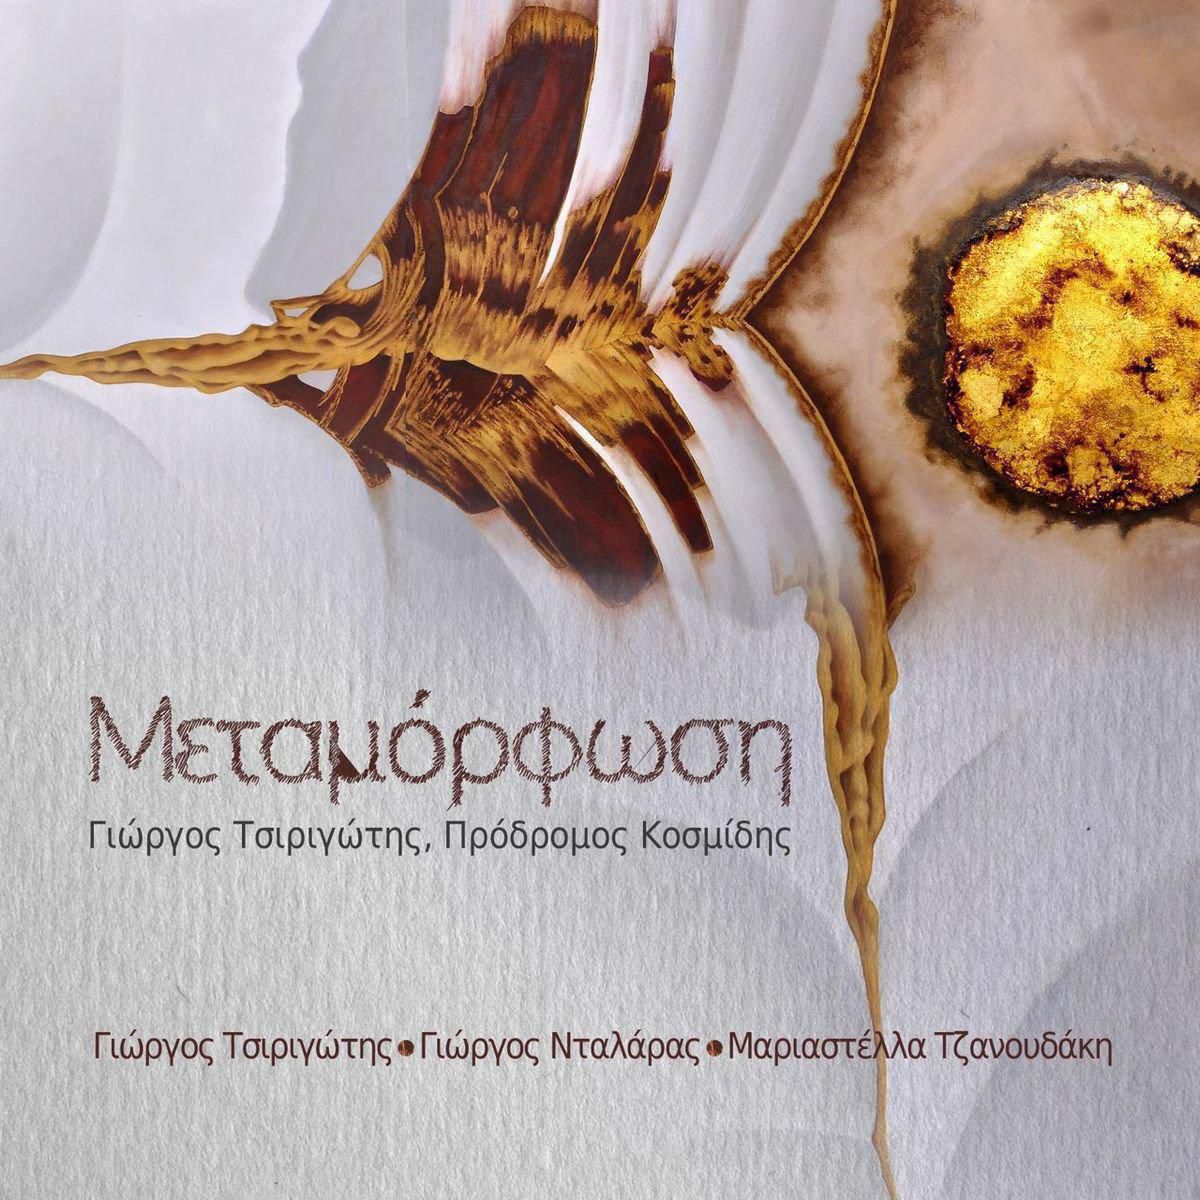 Metamorfosi_cd cover1.jpg